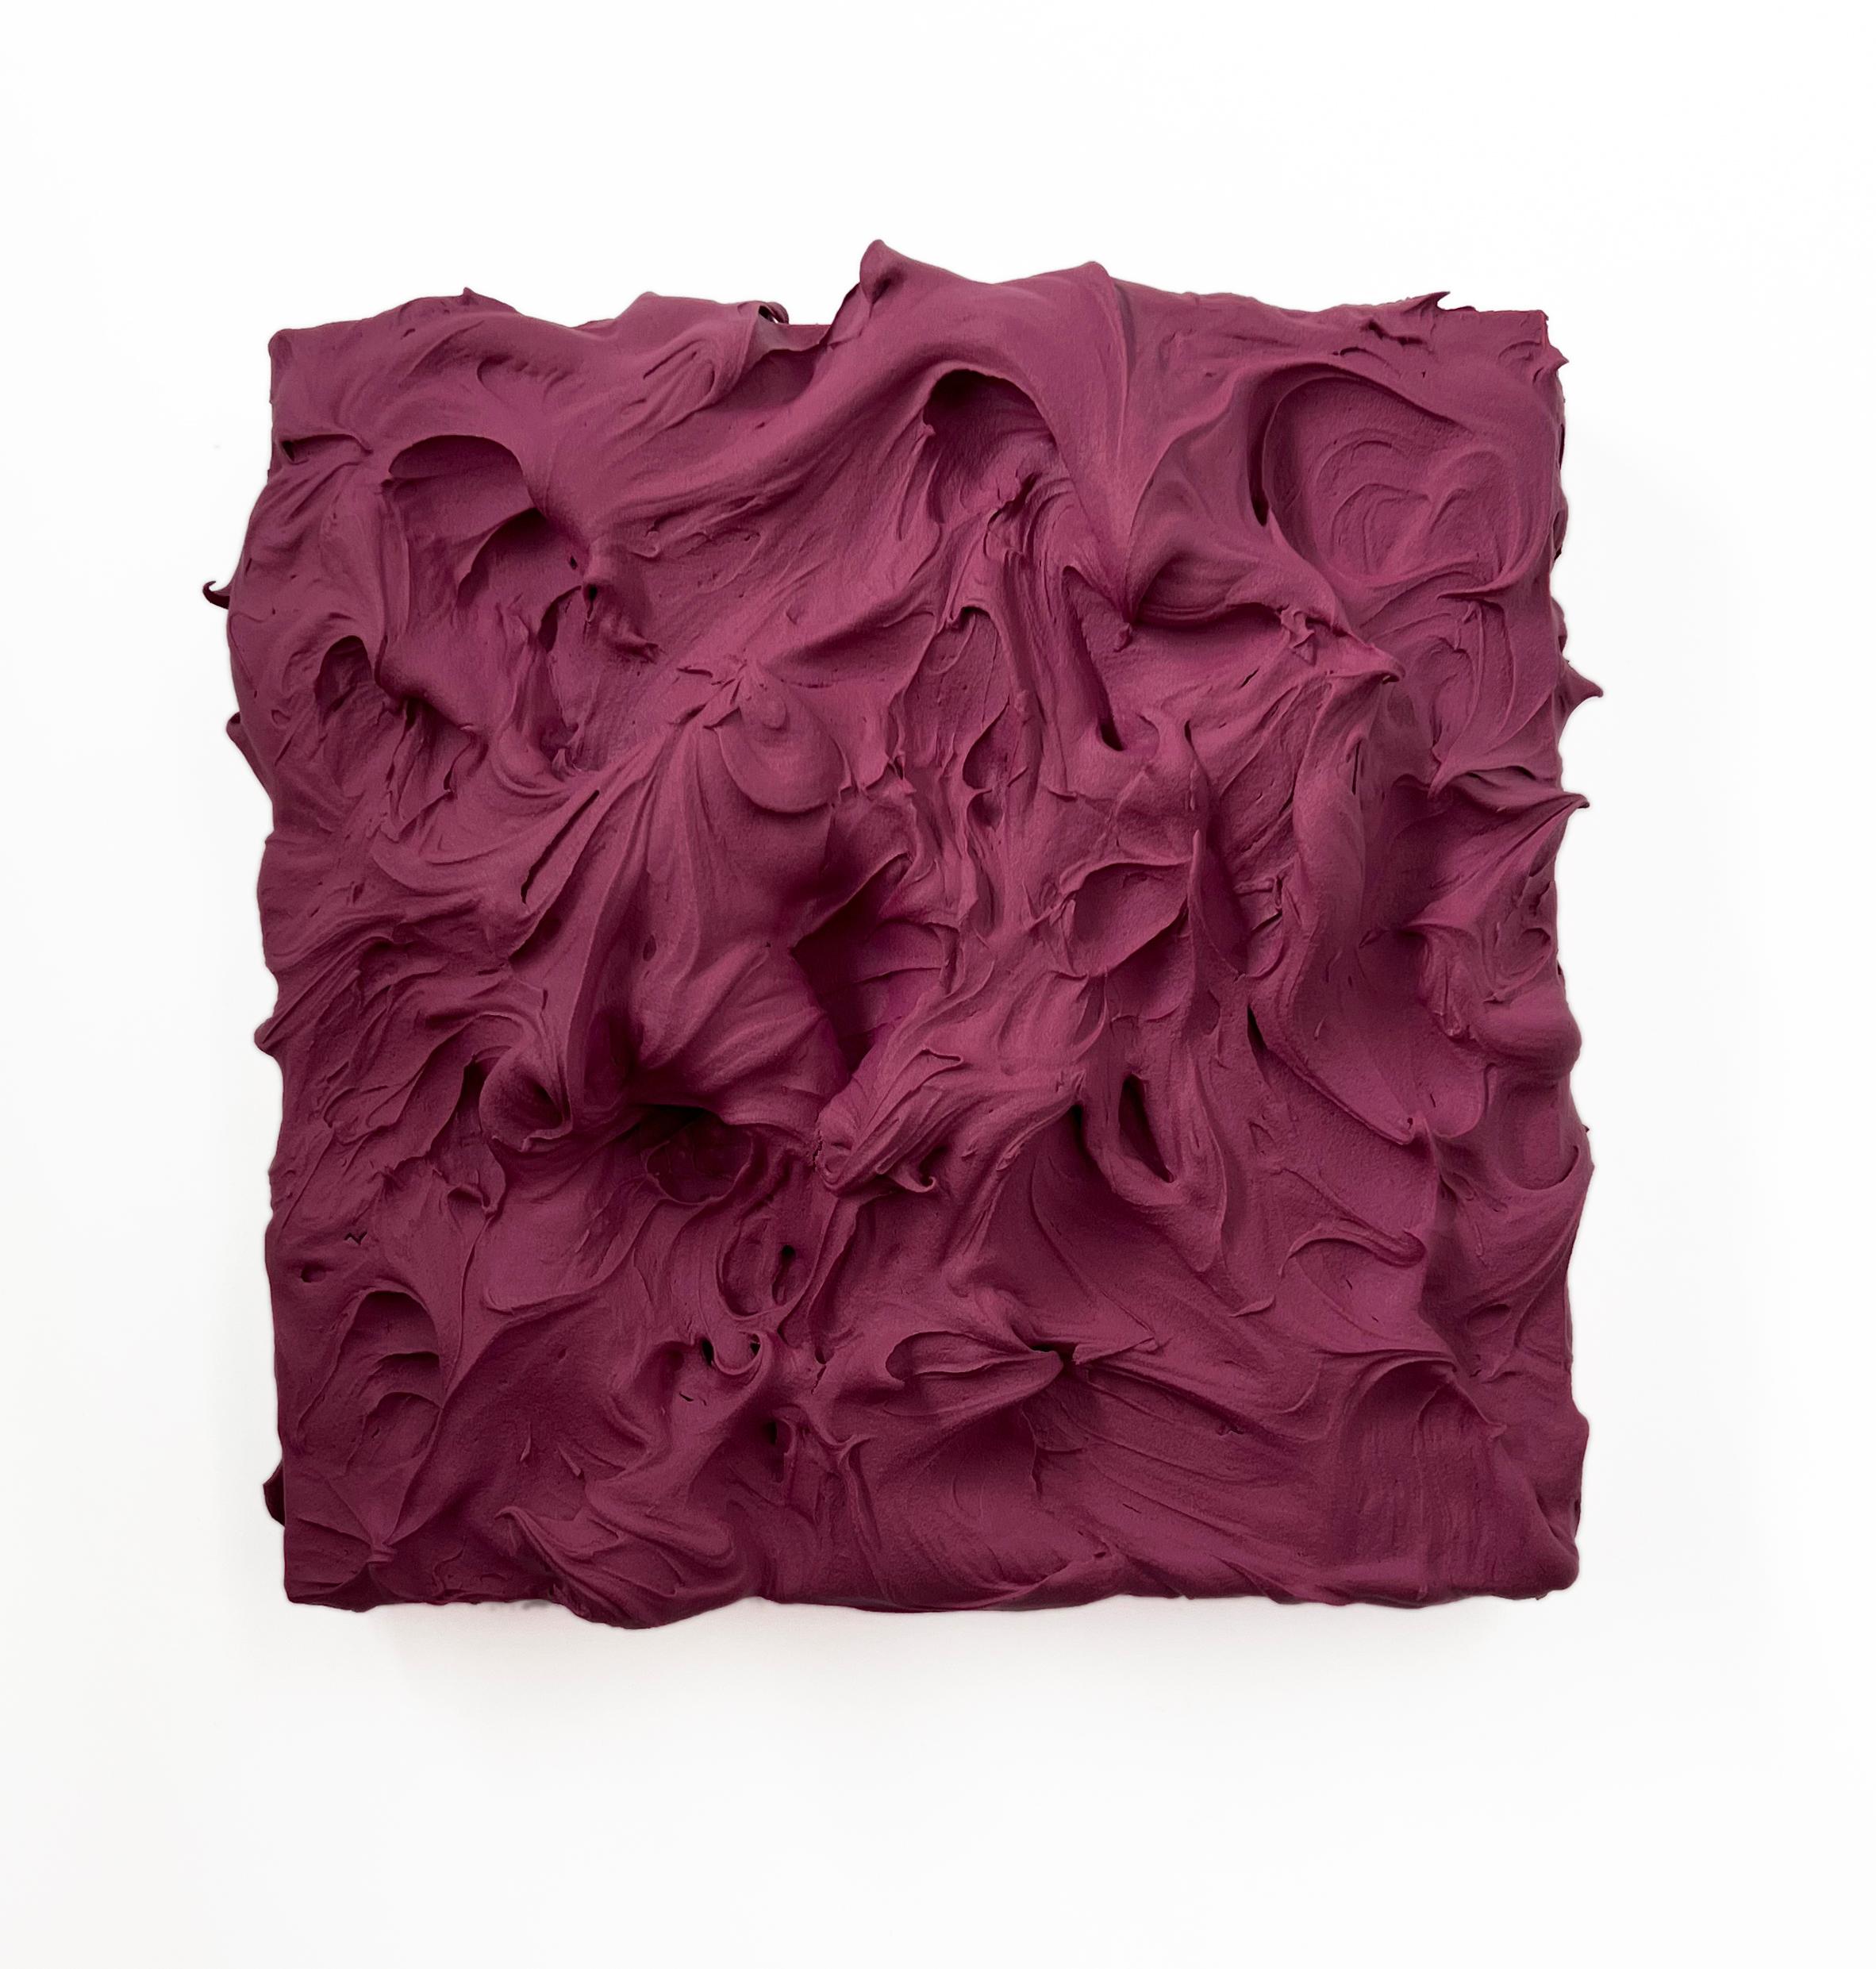 Chloe Hedden - Mauve Excess (purple impasto thick painting monochrome pop  art square design) For Sale at 1stDibs